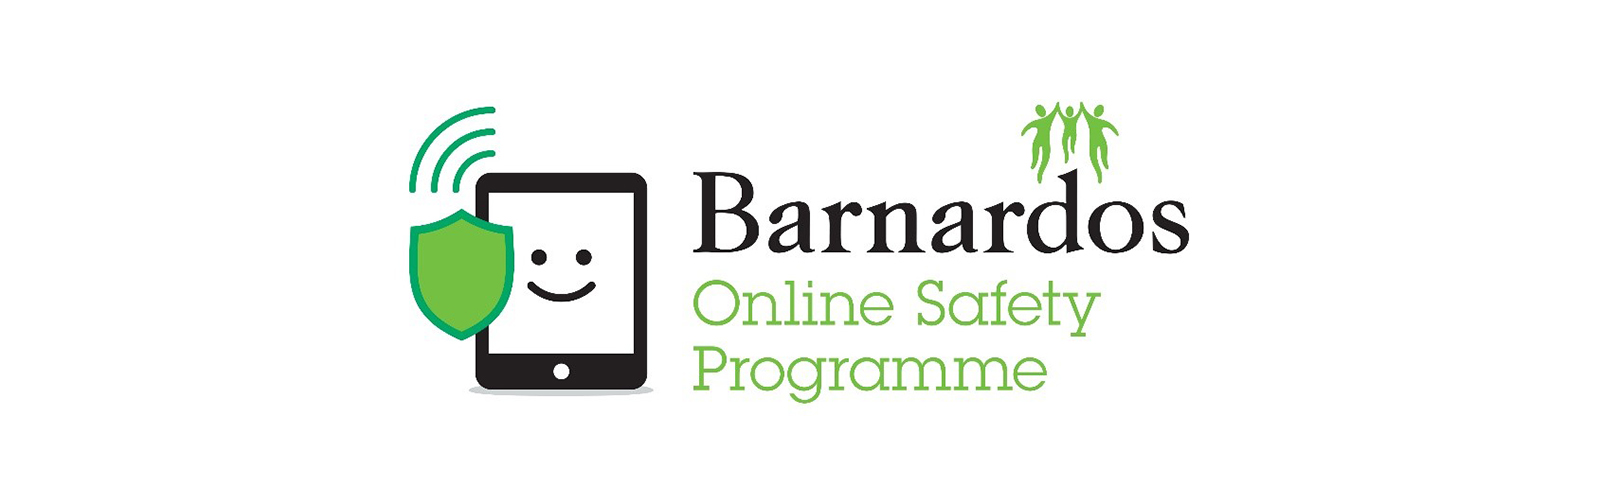 Be Internet Legends - A Program to Teach Children Internet Safety